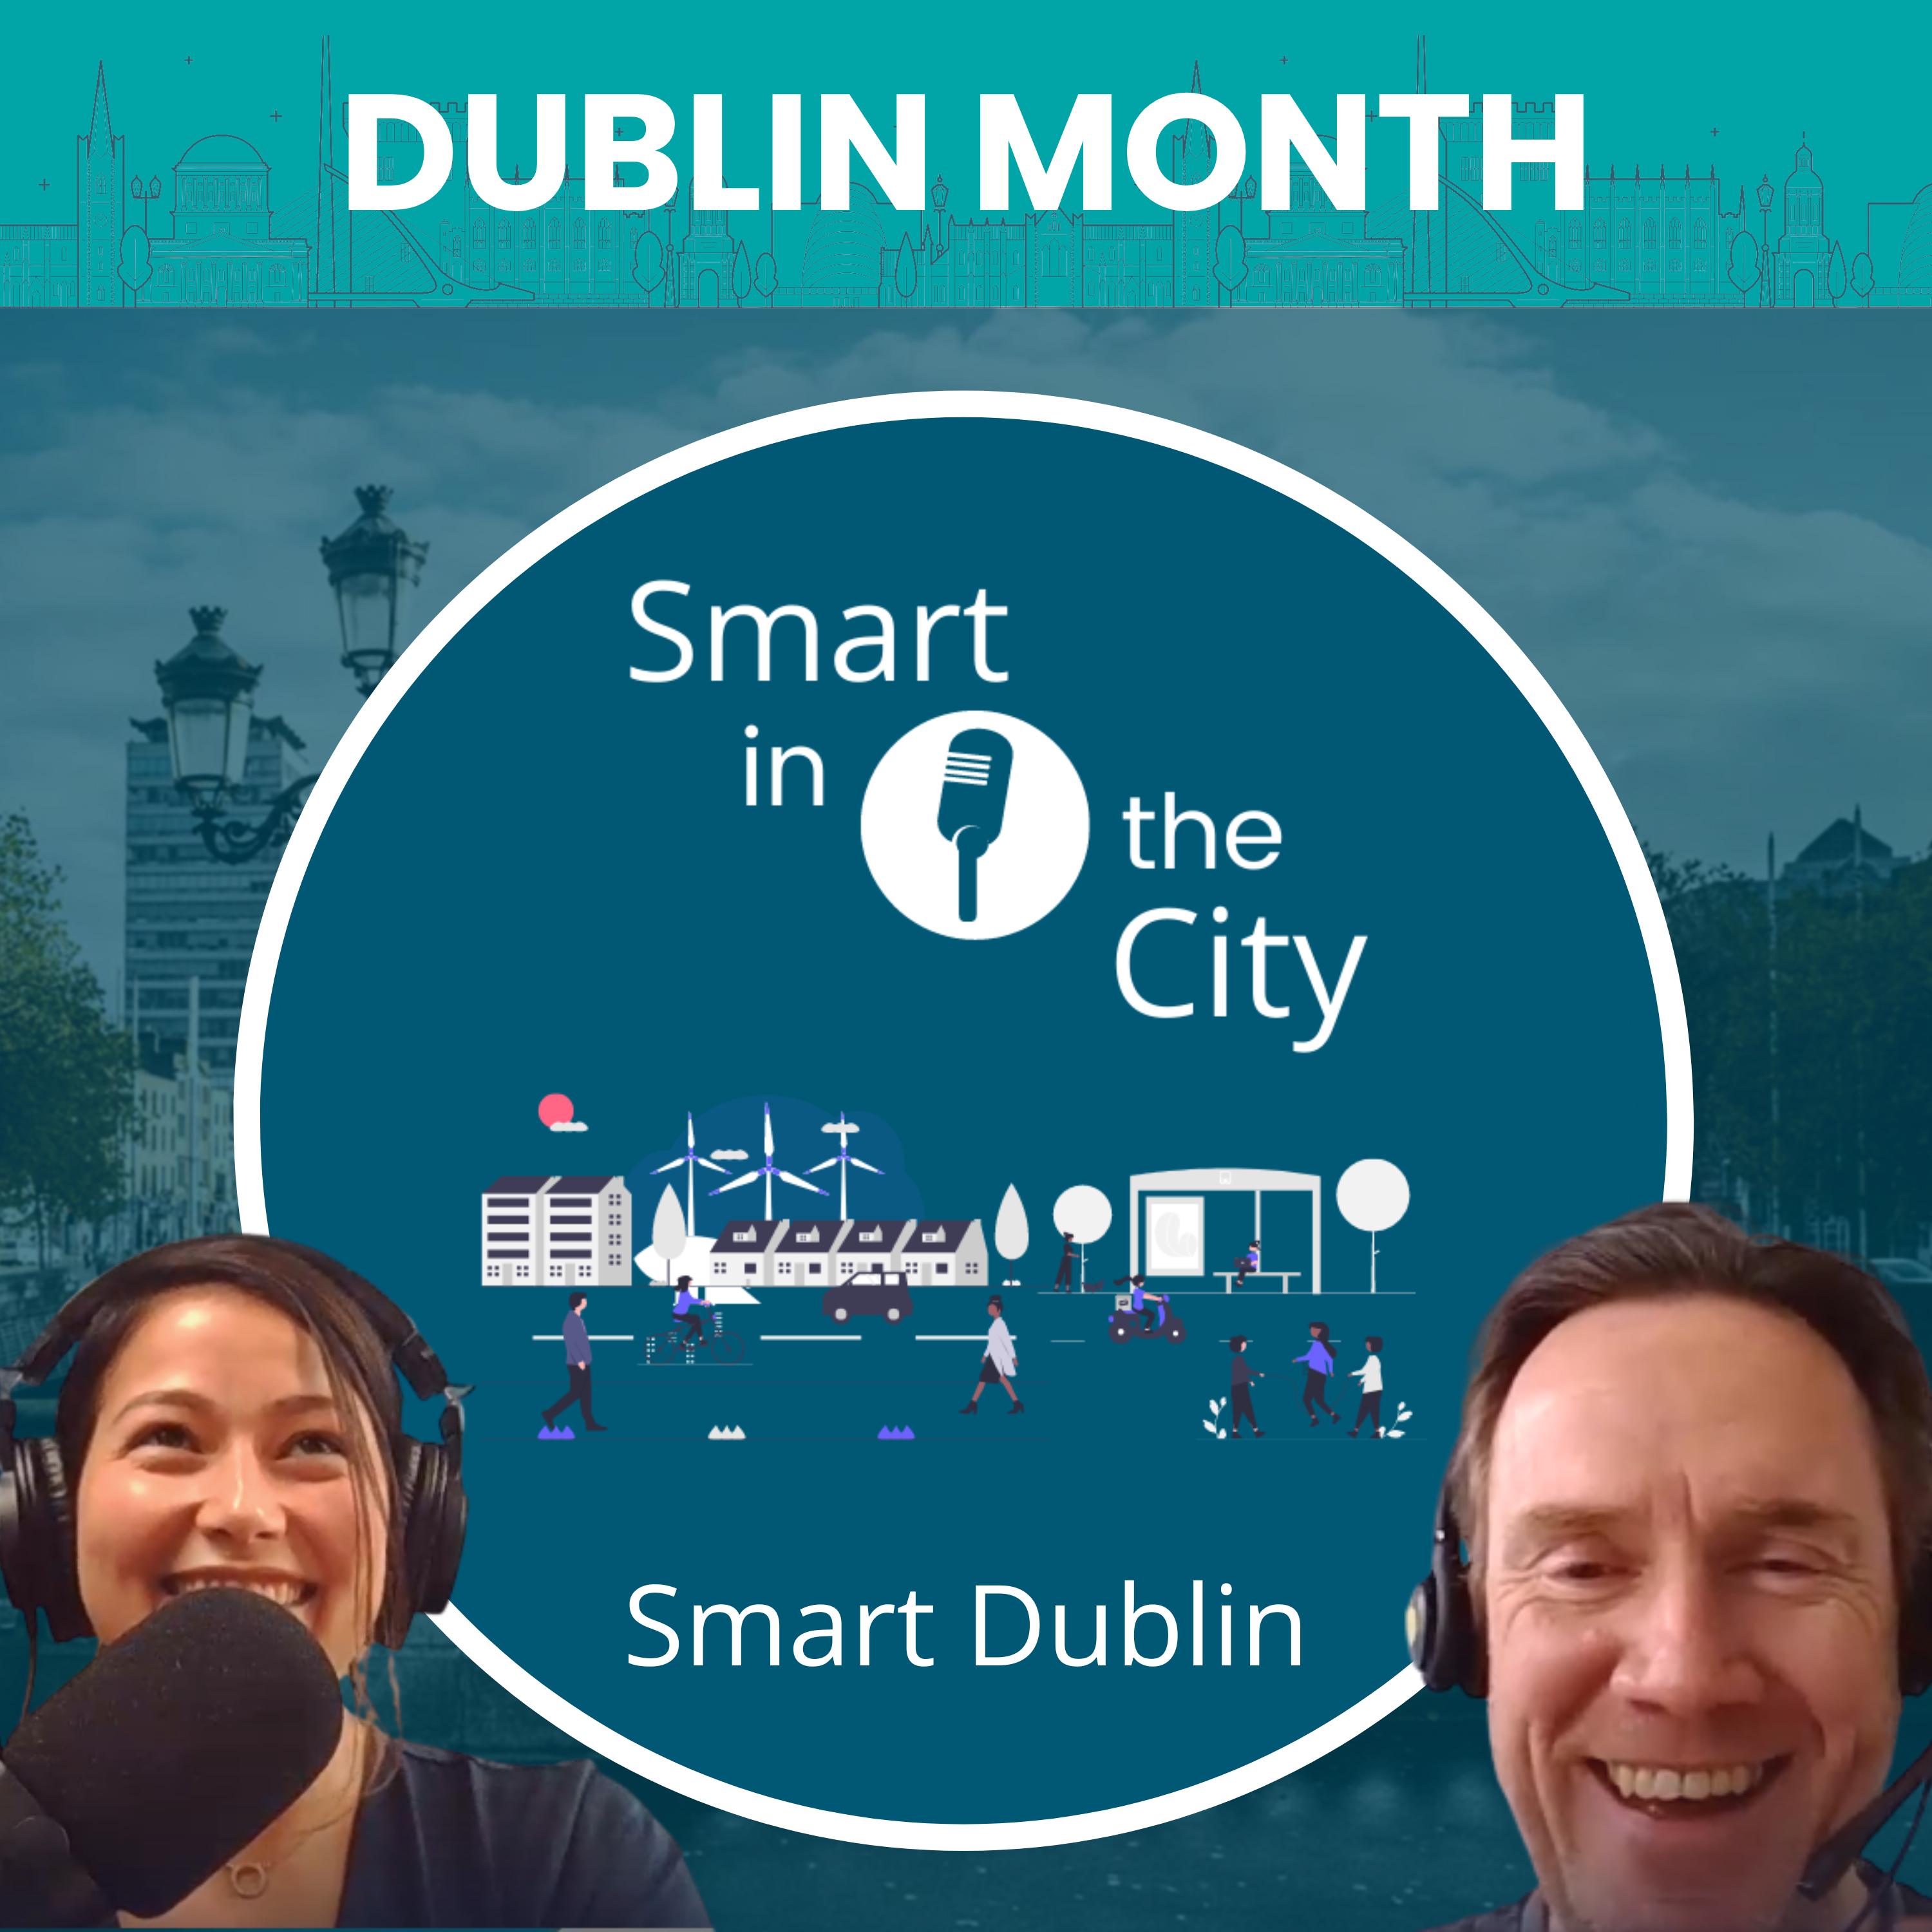 Dublin Month #1 - Smart Dublin: 